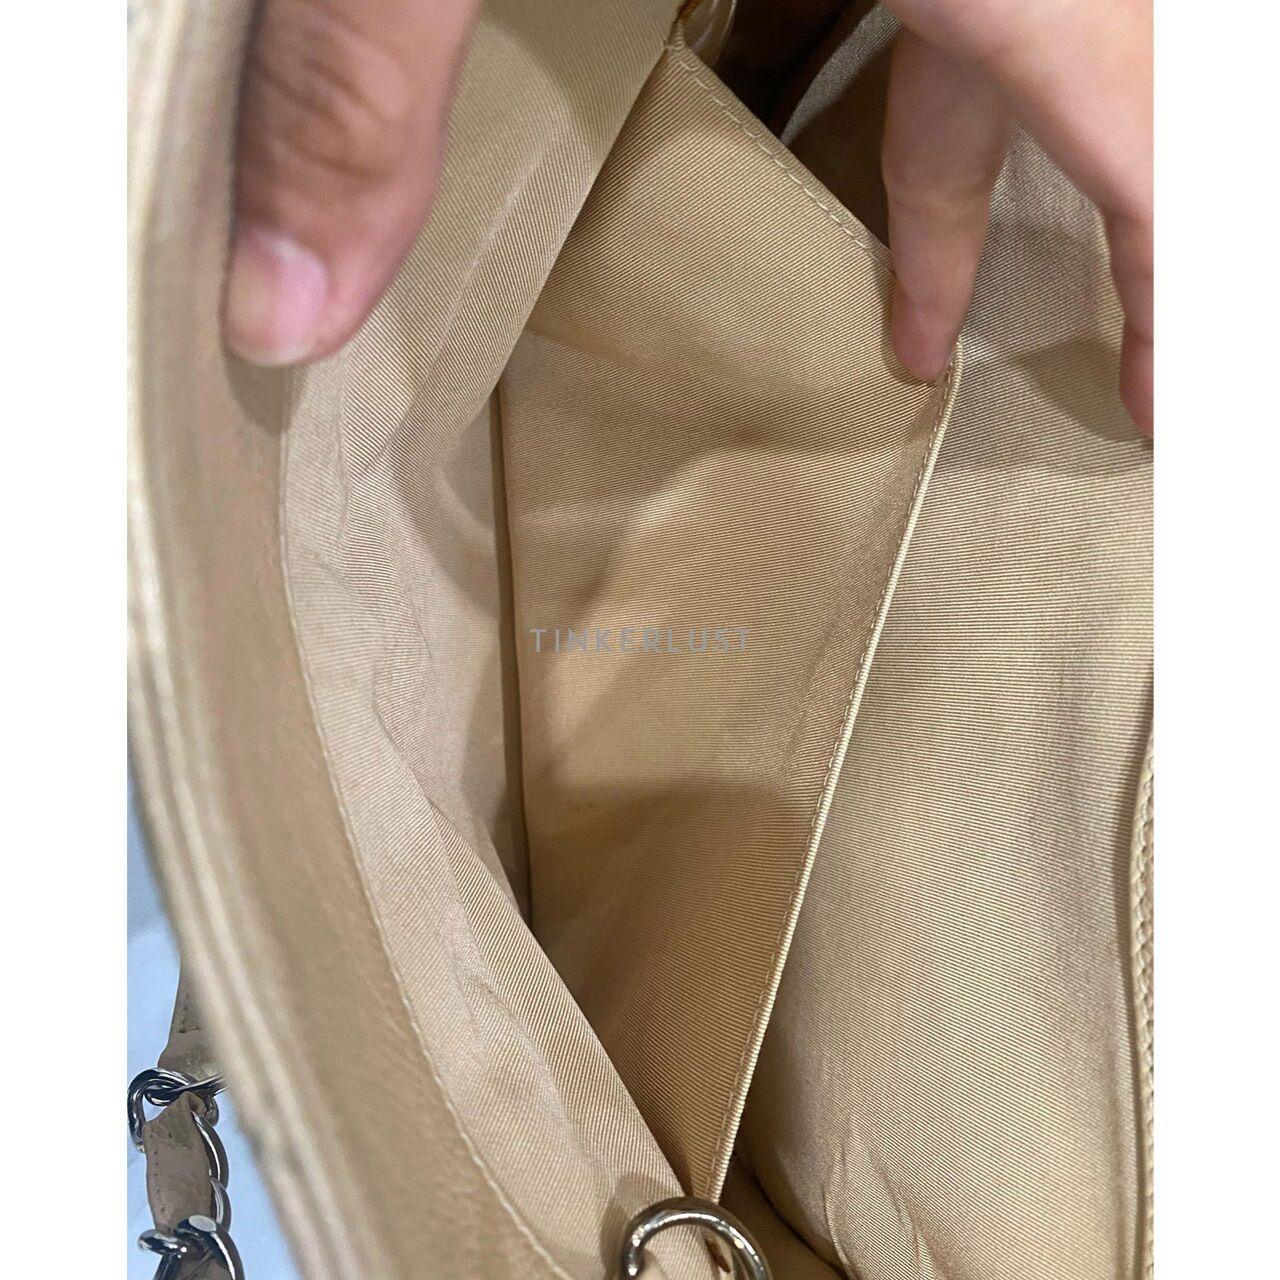 Chanel GST Beige #12 SHW Tote Bag